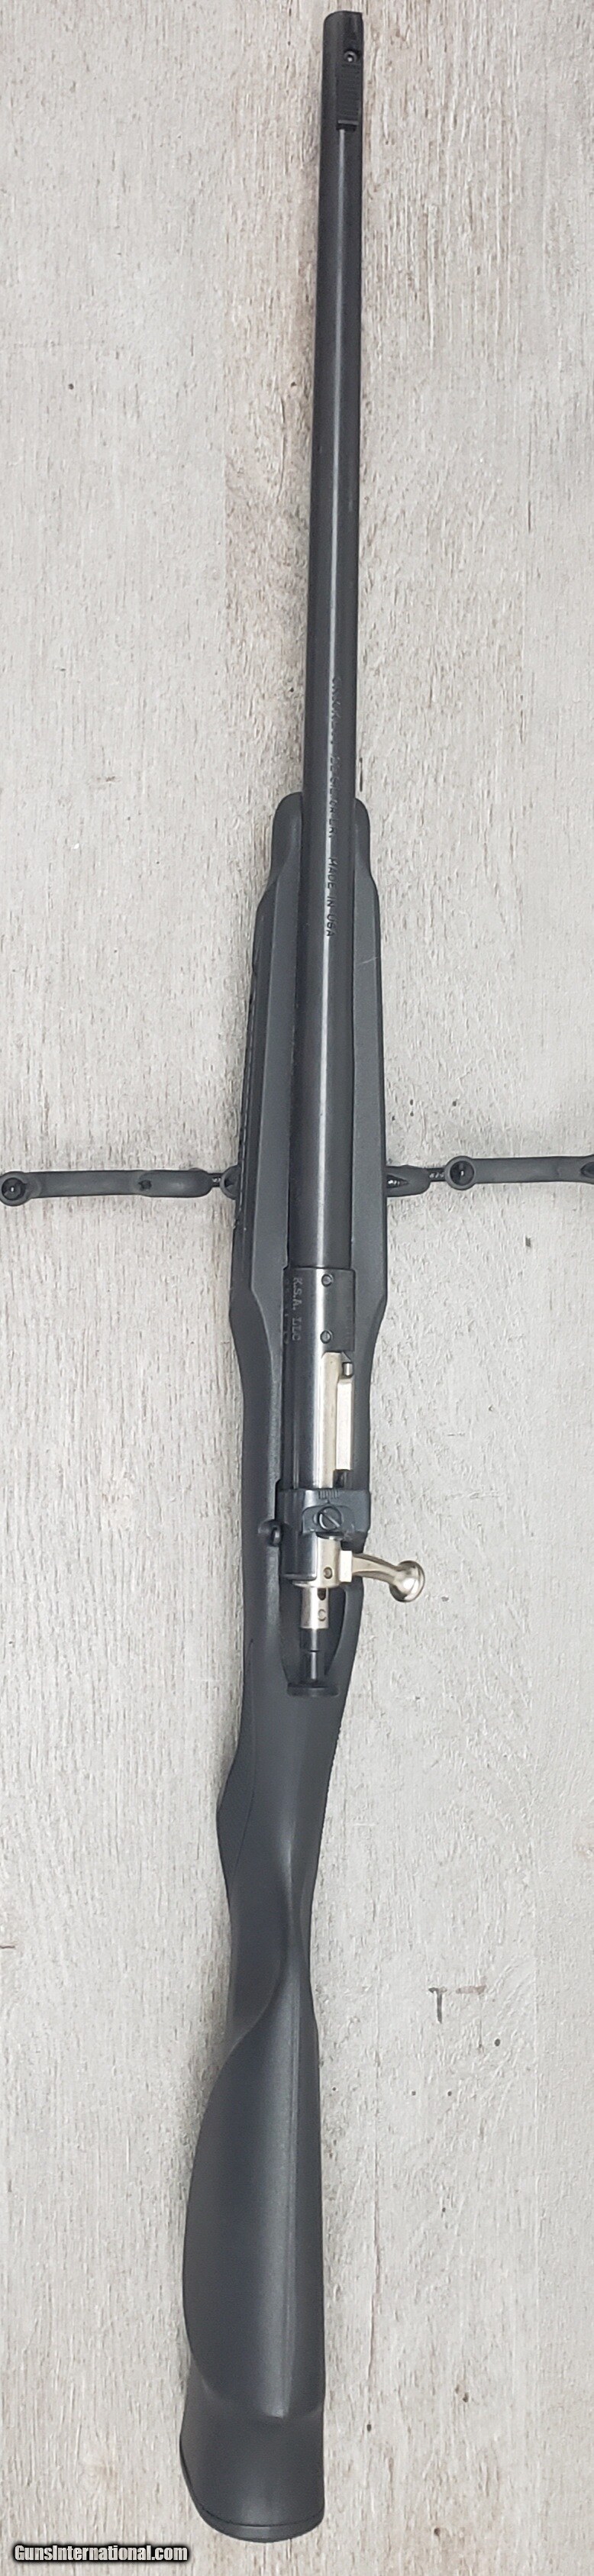 Safety Lock Keys for Crickett® Rifles with Lock - Keystone